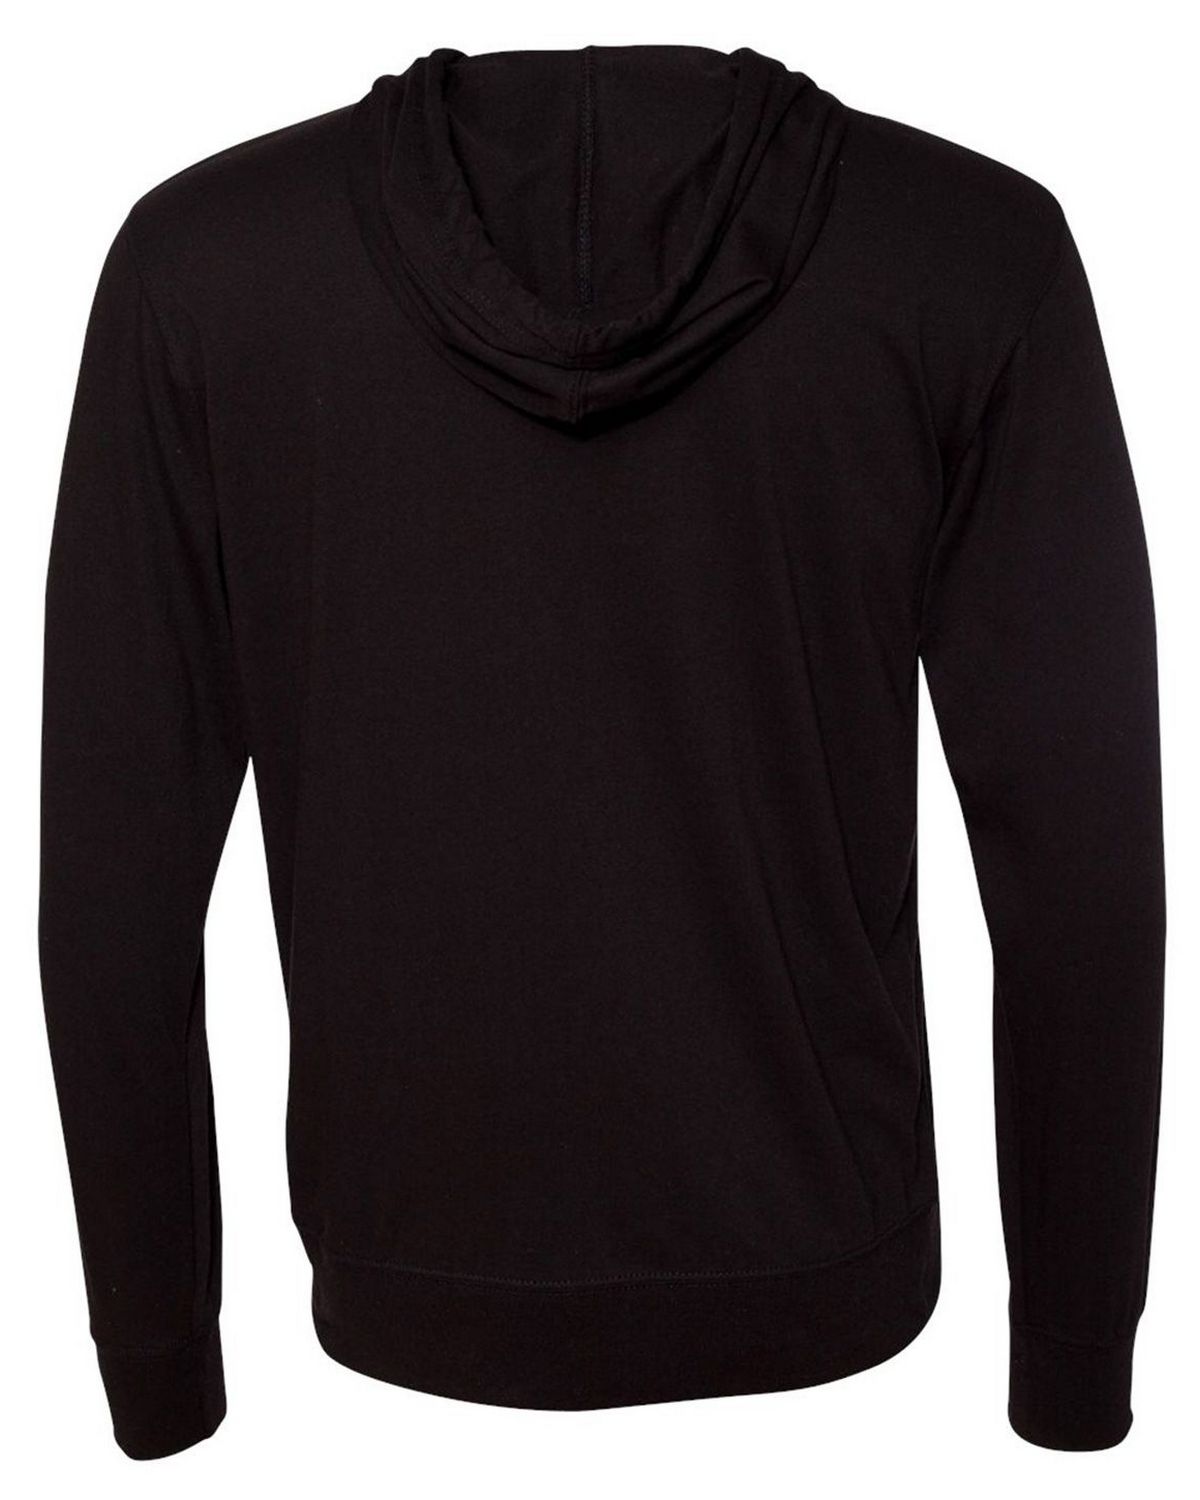 Independent Trading Co Lightweight Full-Zip Hooded T-Shirt SS150JZ upto 2XL